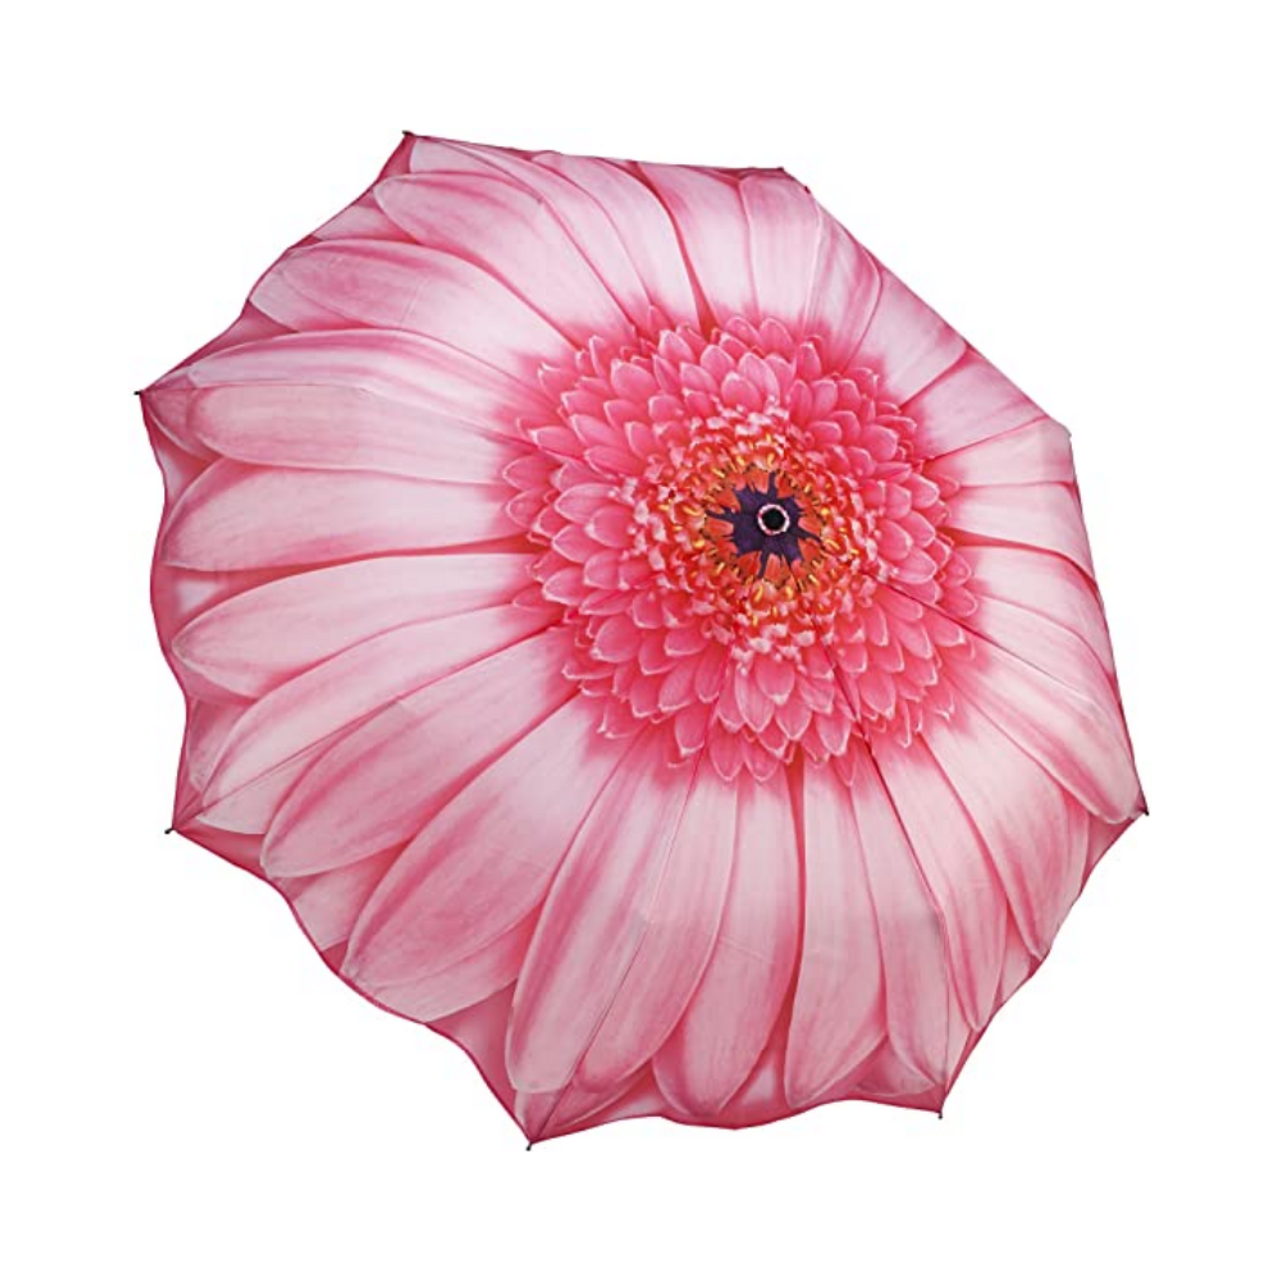 Galleria Enterprises Reverse Close Double Sided Umbrella Pink Daisy